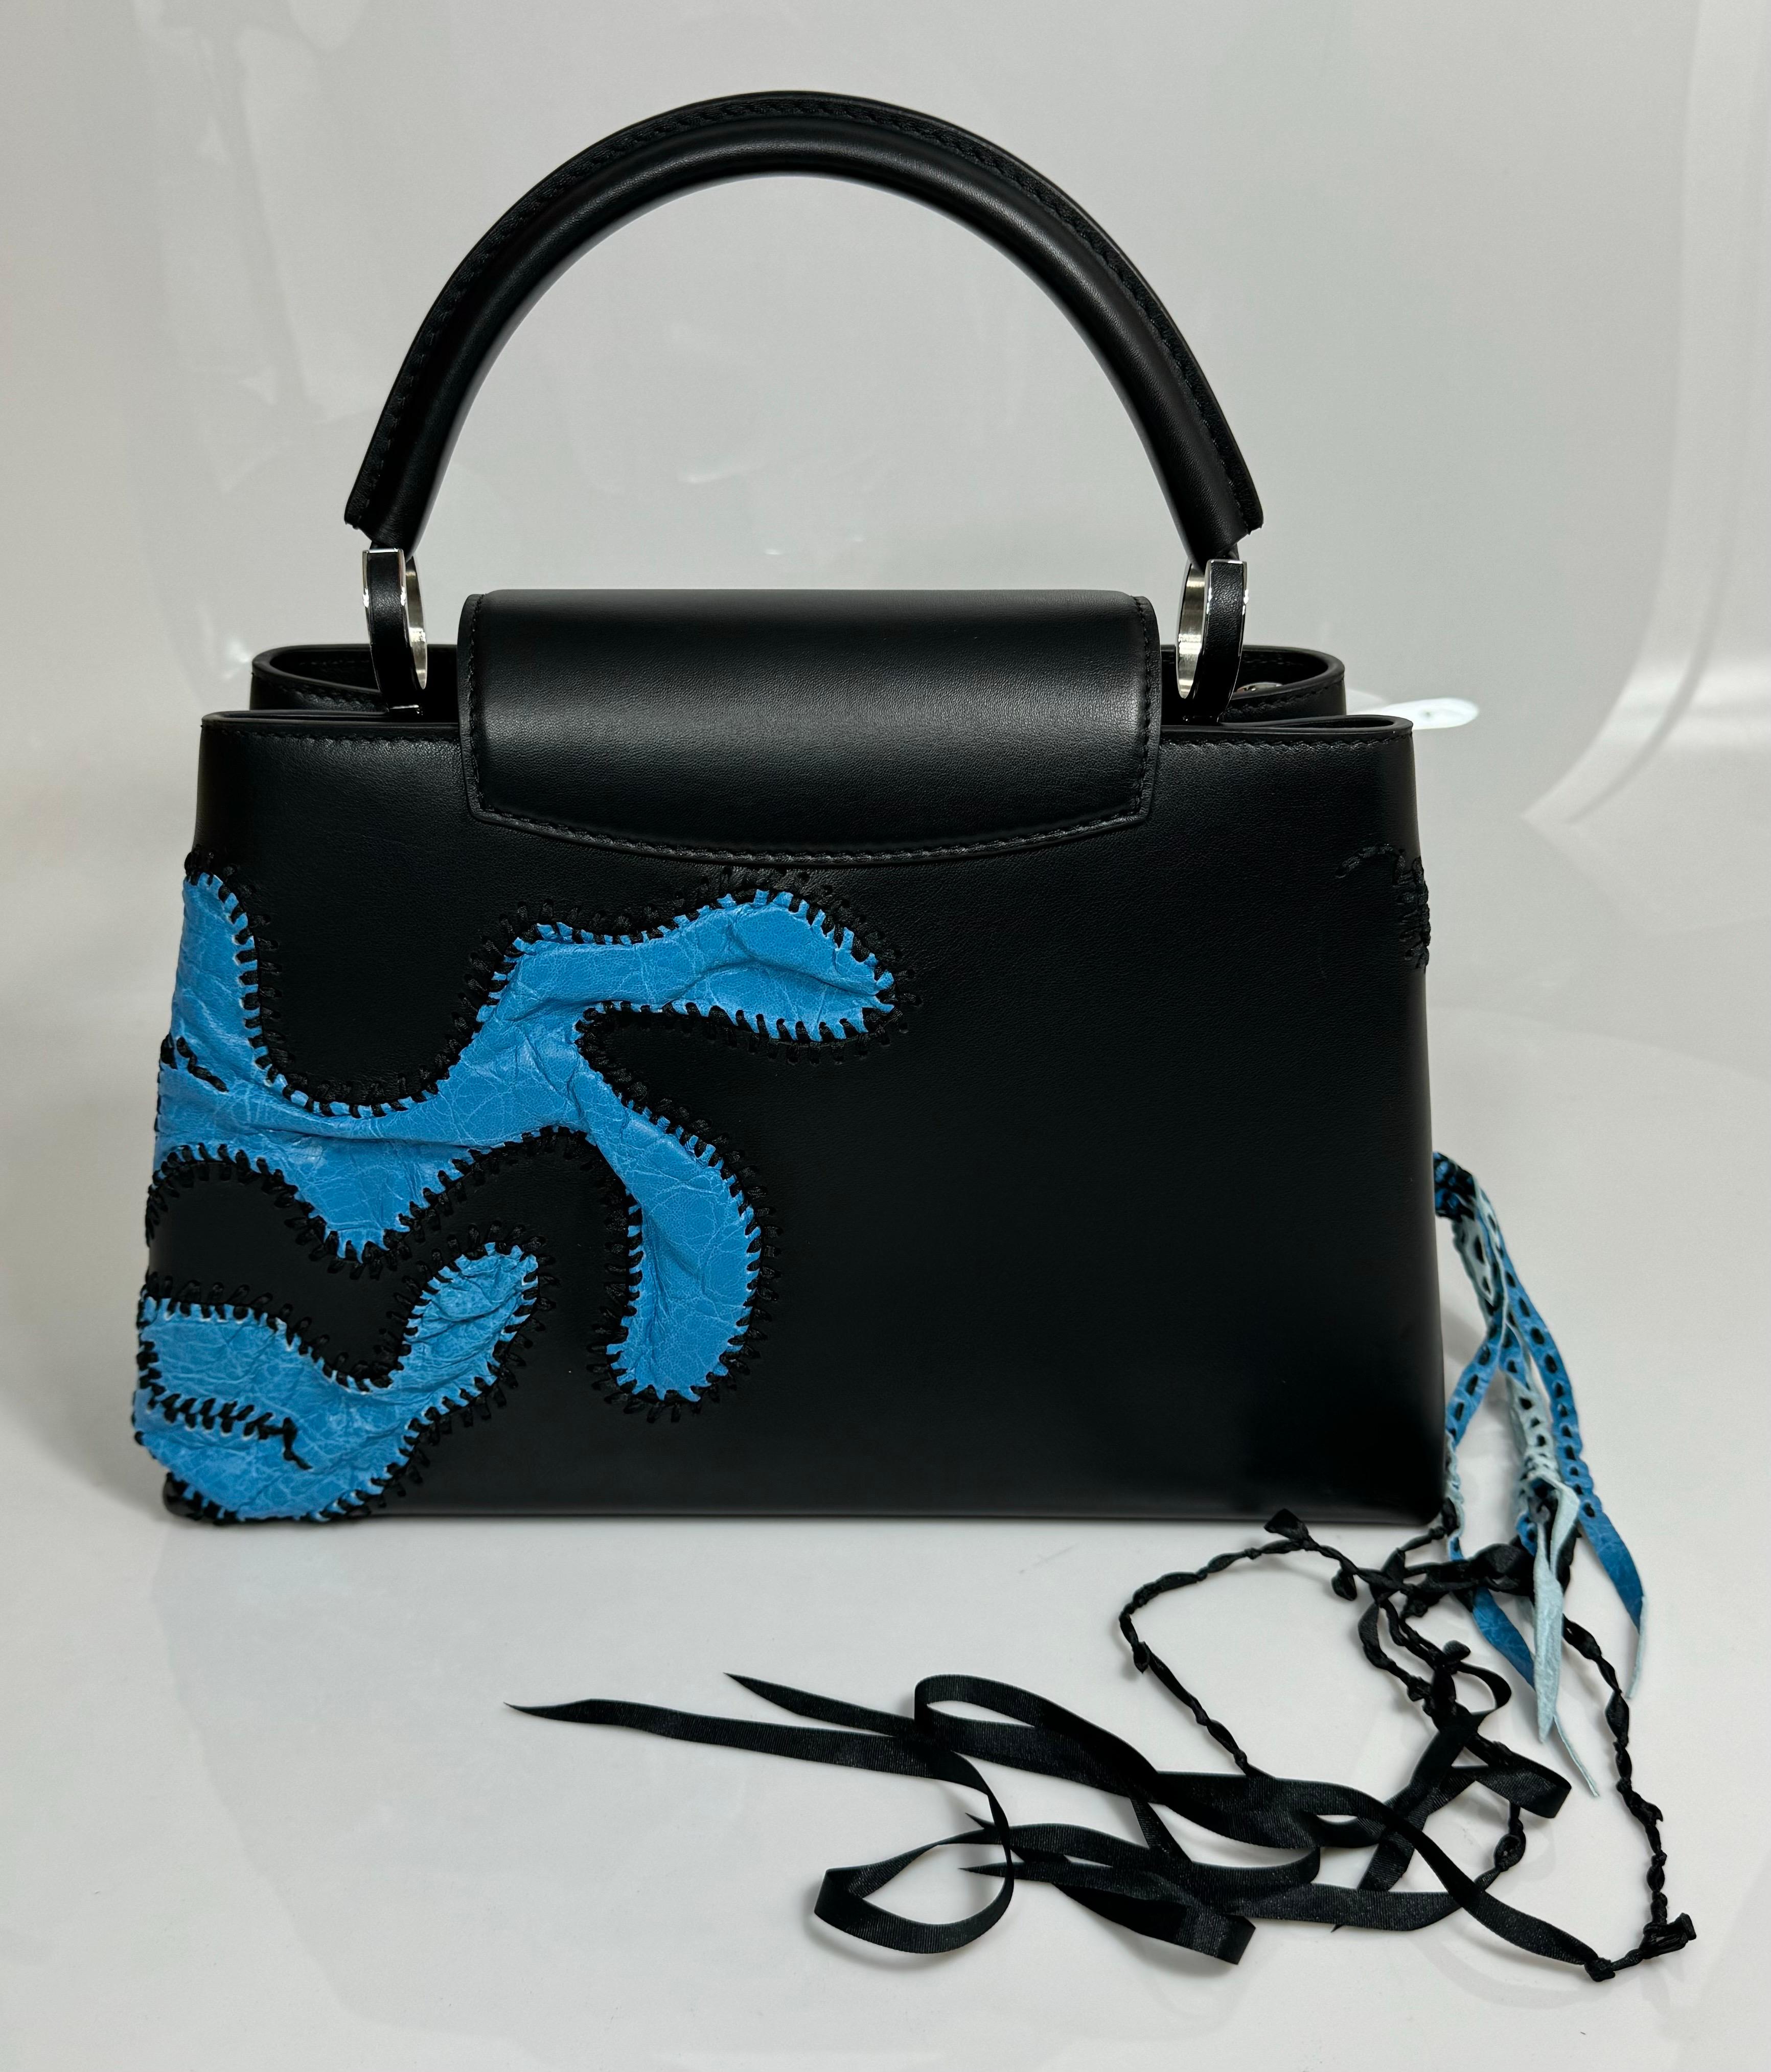 Louis Vuitton Limited Edition Nicholas Hlobo's Artycapucines Handbag-NEW IN BOX For Sale 5